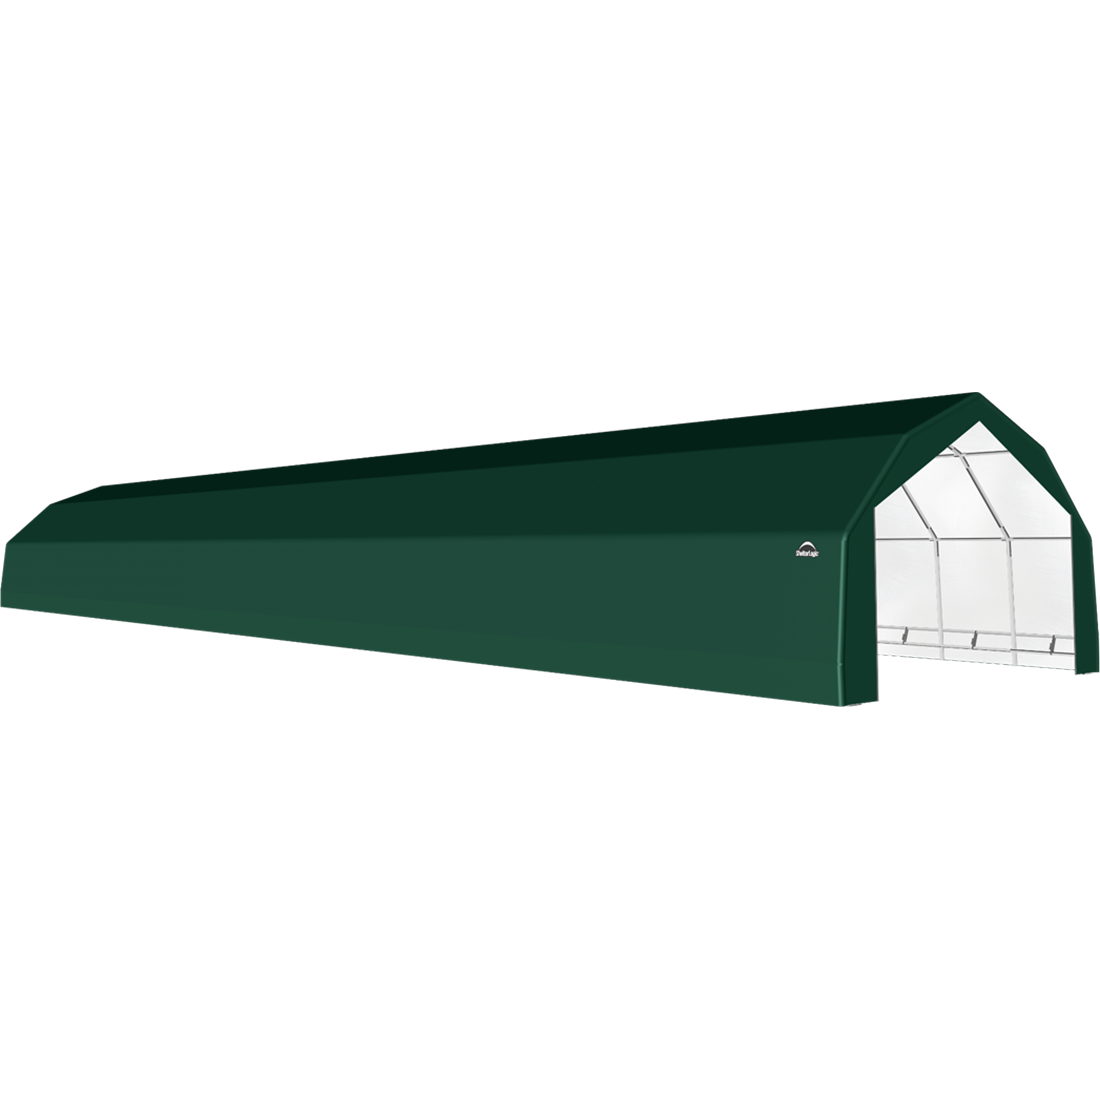 ShelterTech SP Series Barn Shelter, 20 ft. x 100 ft. x 12 ft. Heavy Duty PVC 14.5 oz. Green